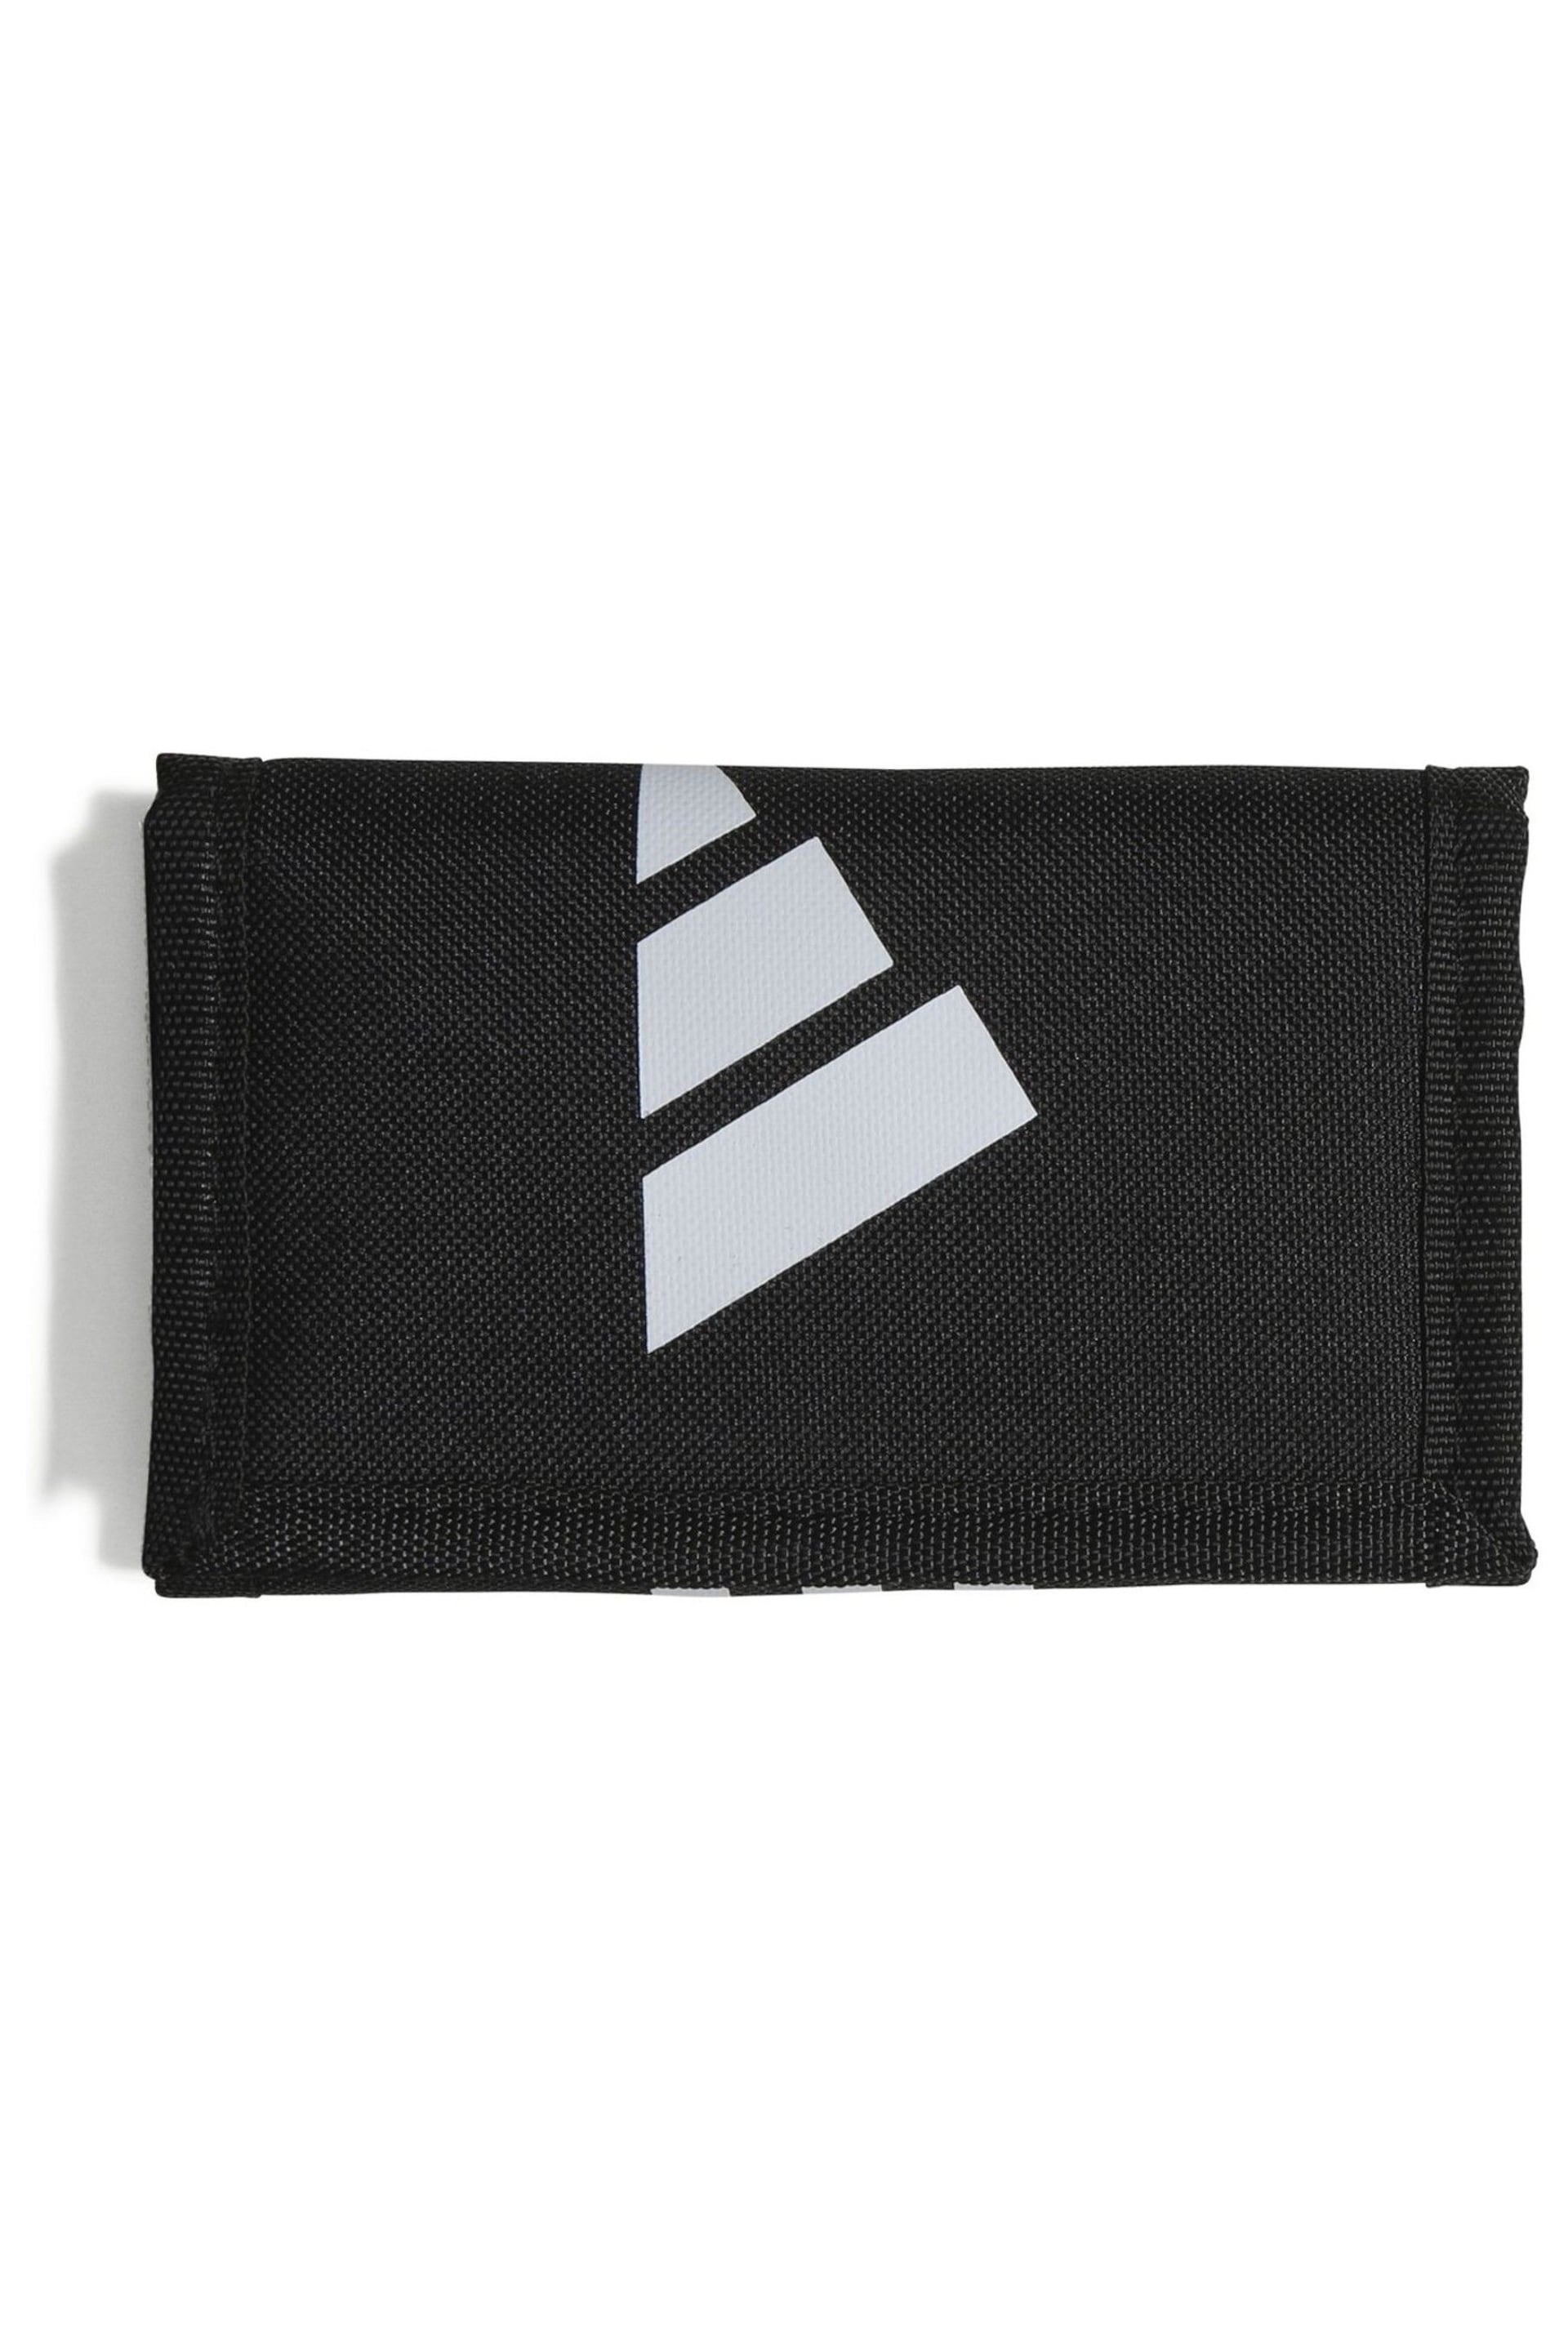 adidas Black Essentials Training Wallet - Image 1 of 5